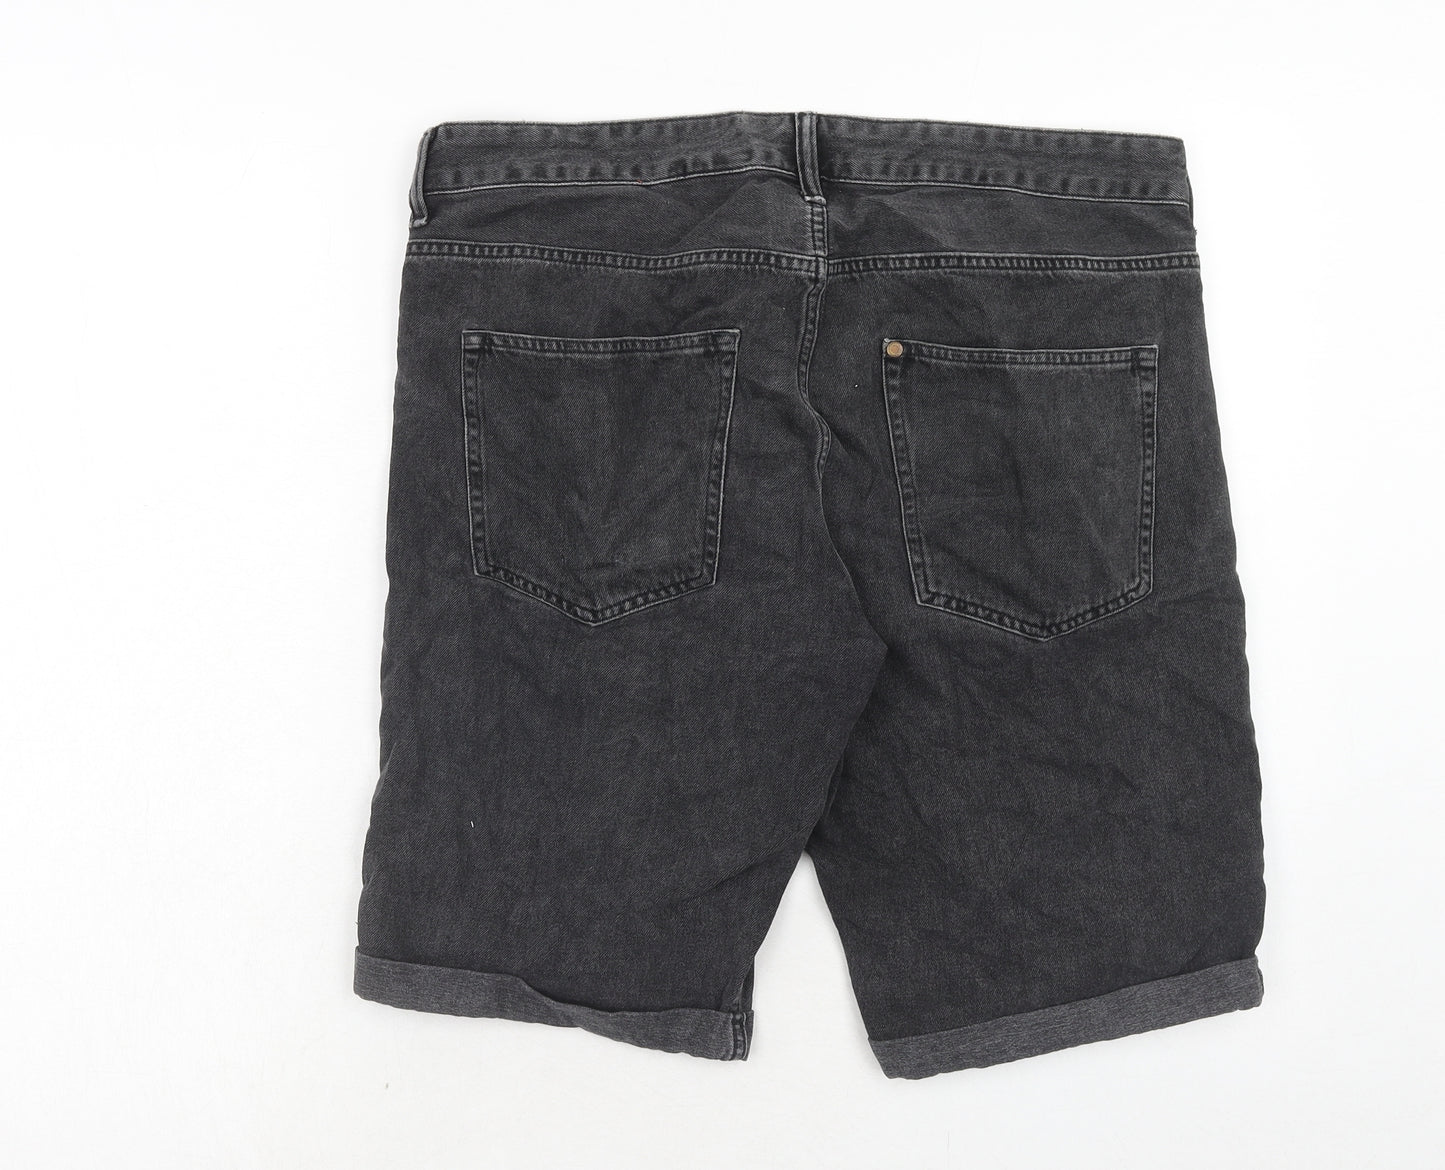 H&M Mens Black Cotton Bermuda Shorts Size 34 in Regular Zip